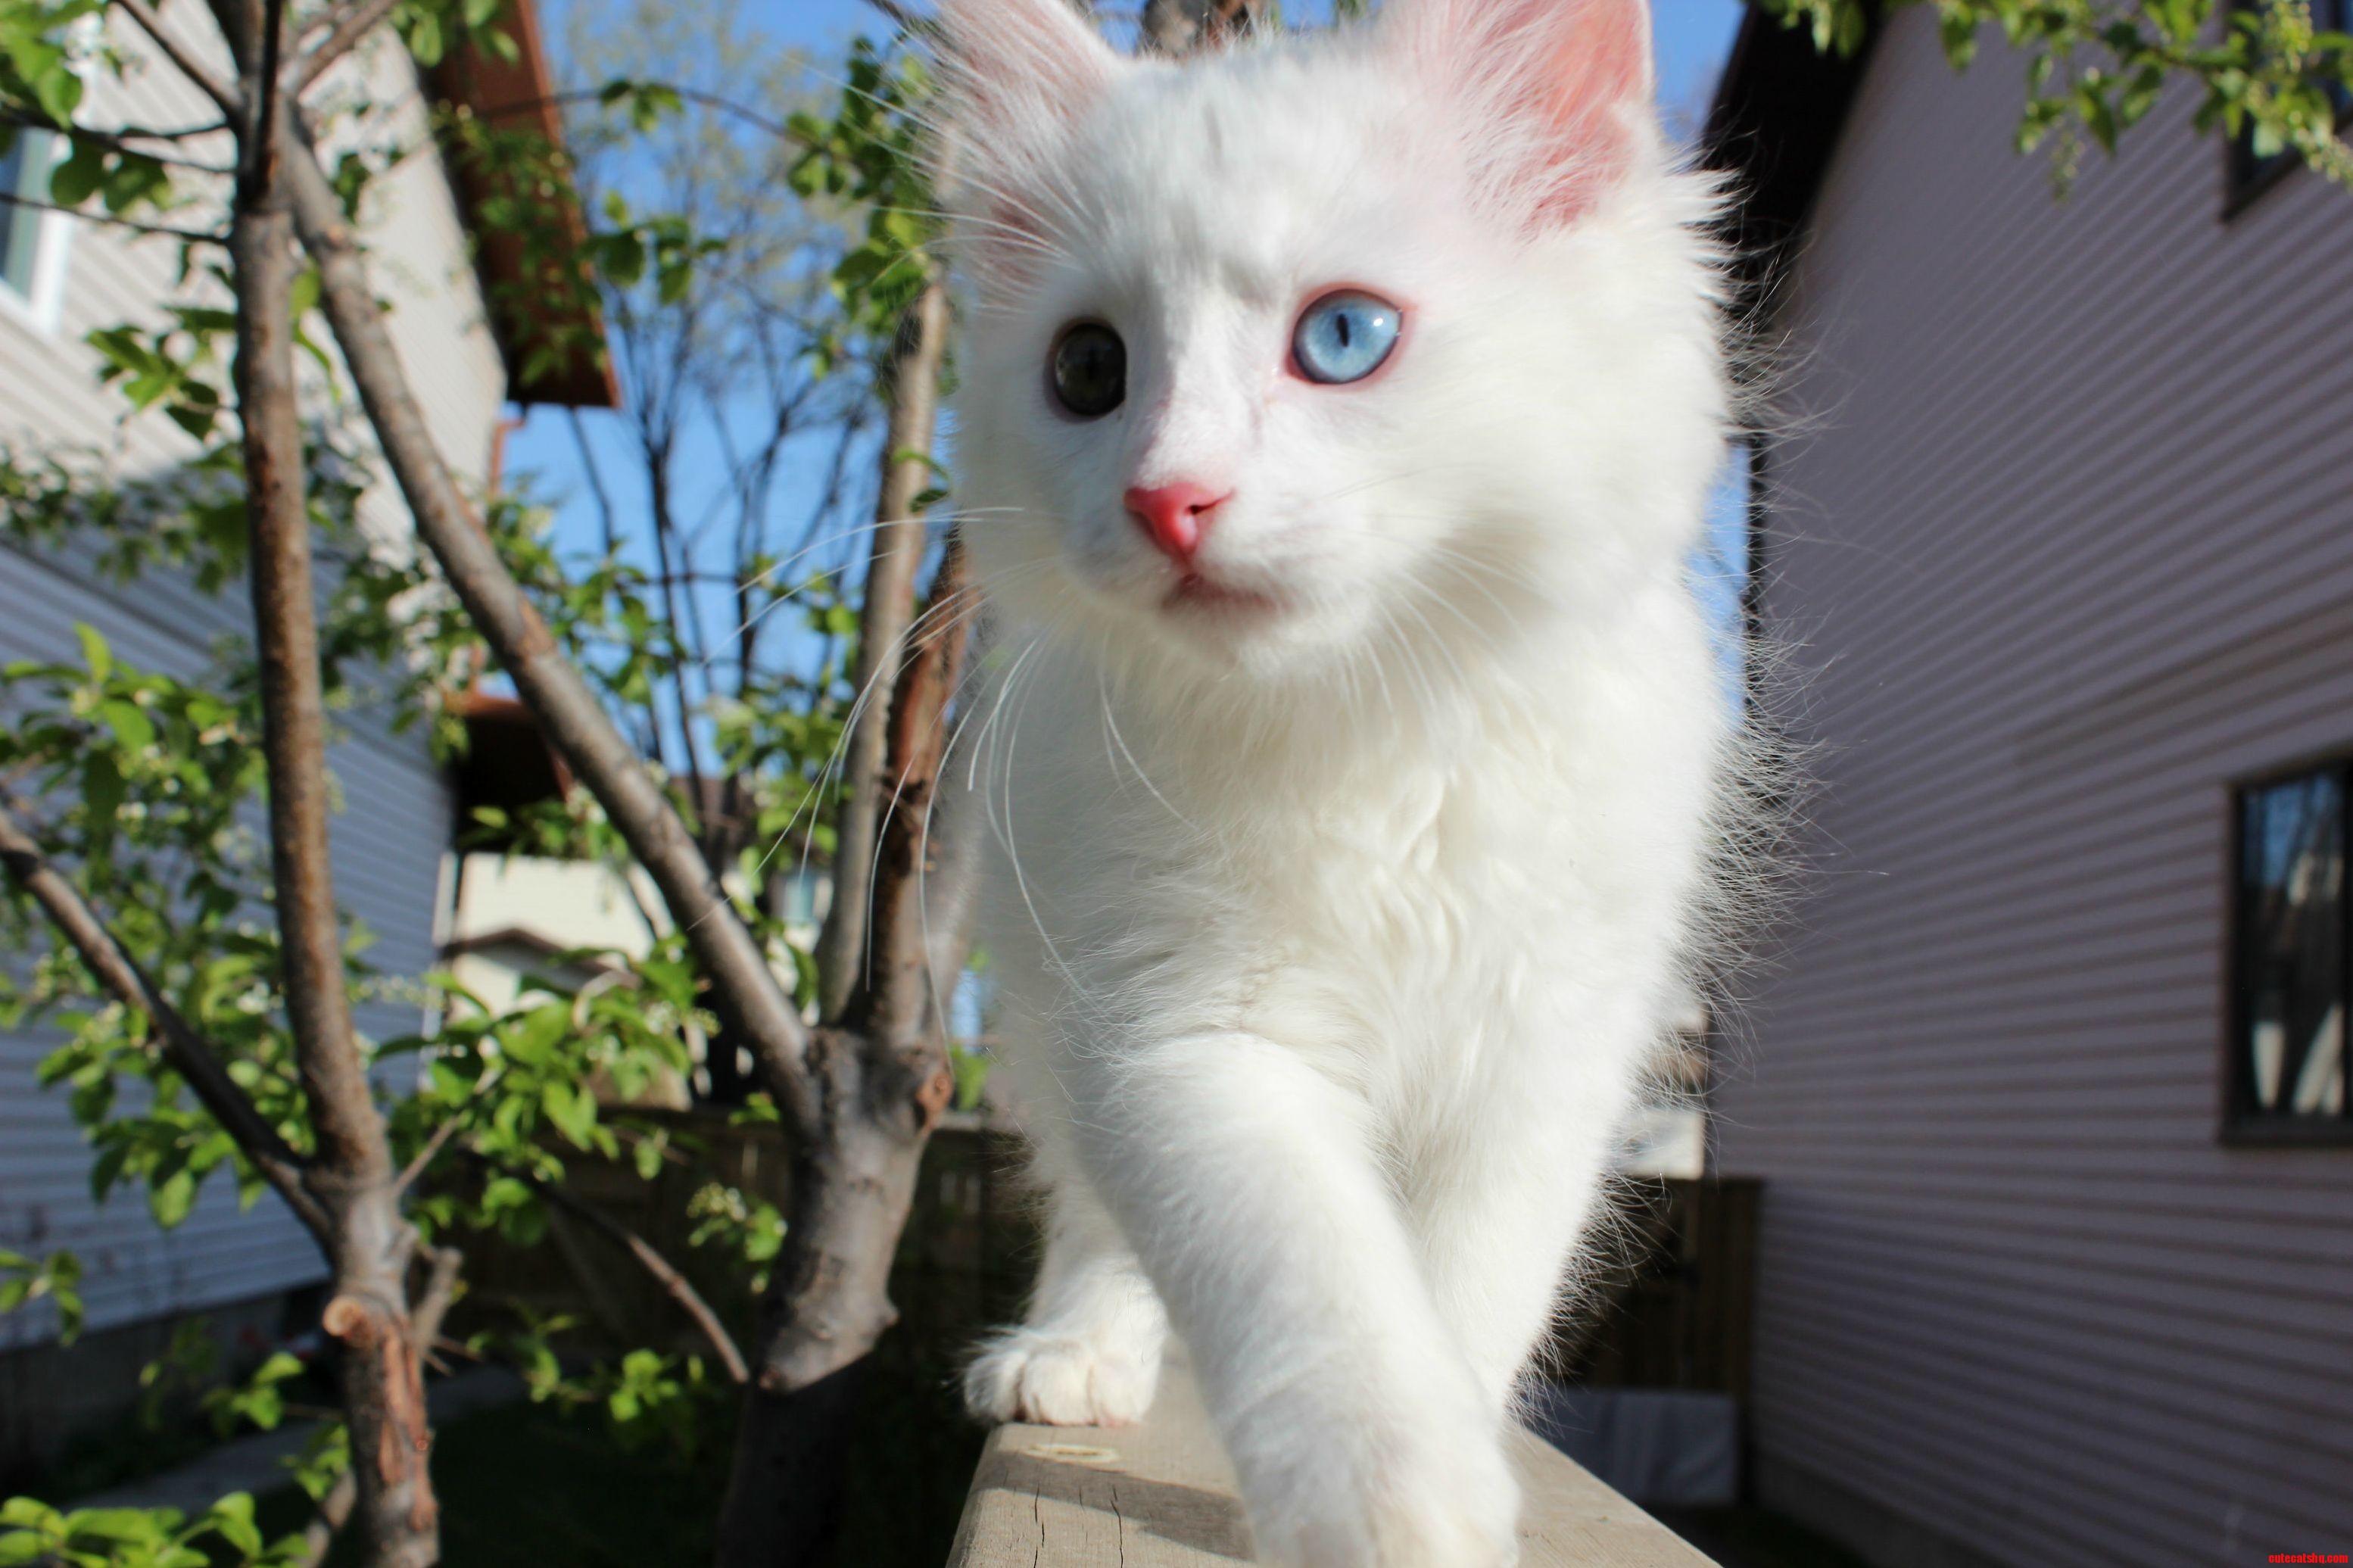 Meet my kitten named Coco he has one blue eye and one green eye.